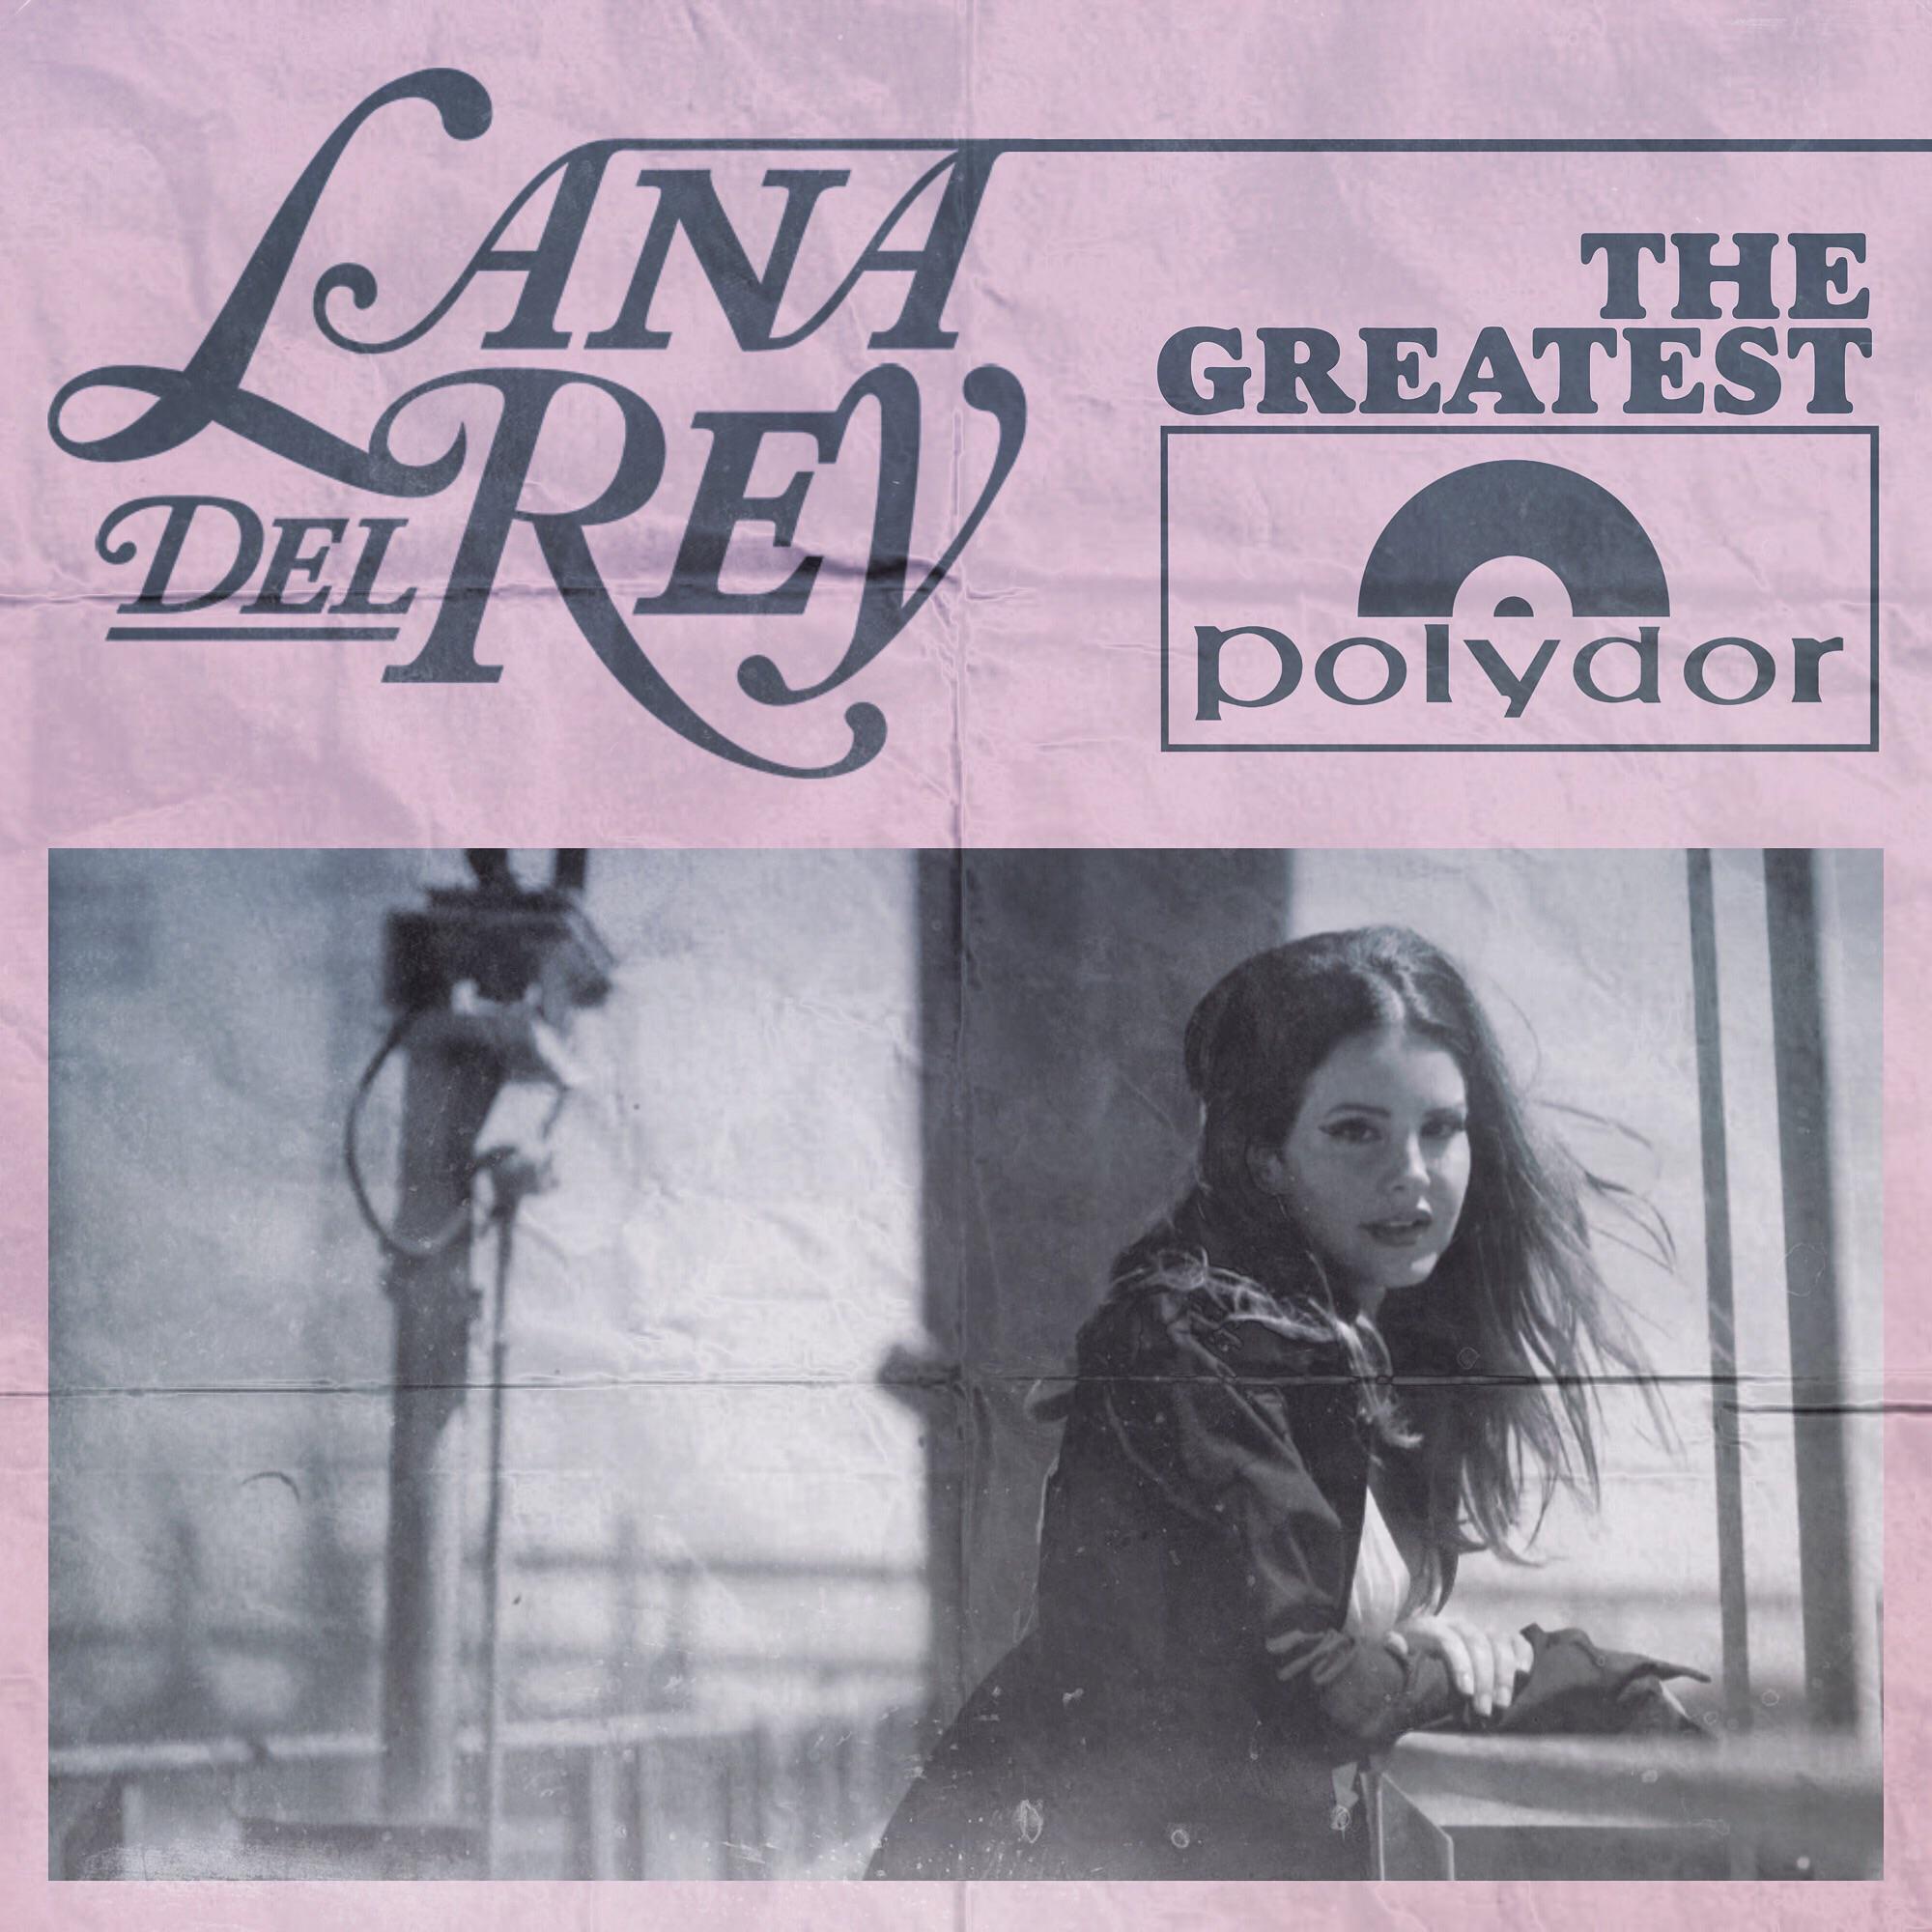 Lana Del Rey The greatest cover artwork